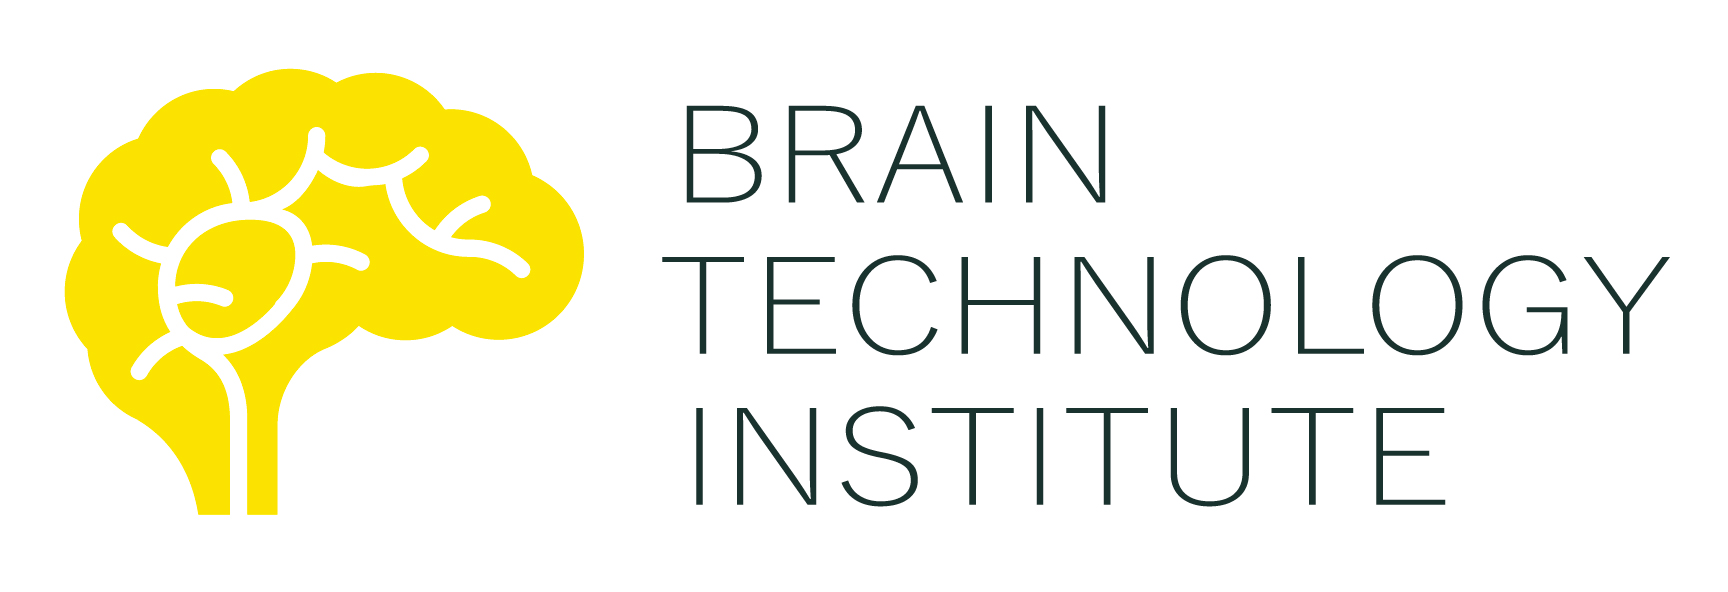 Brain Technology Institute